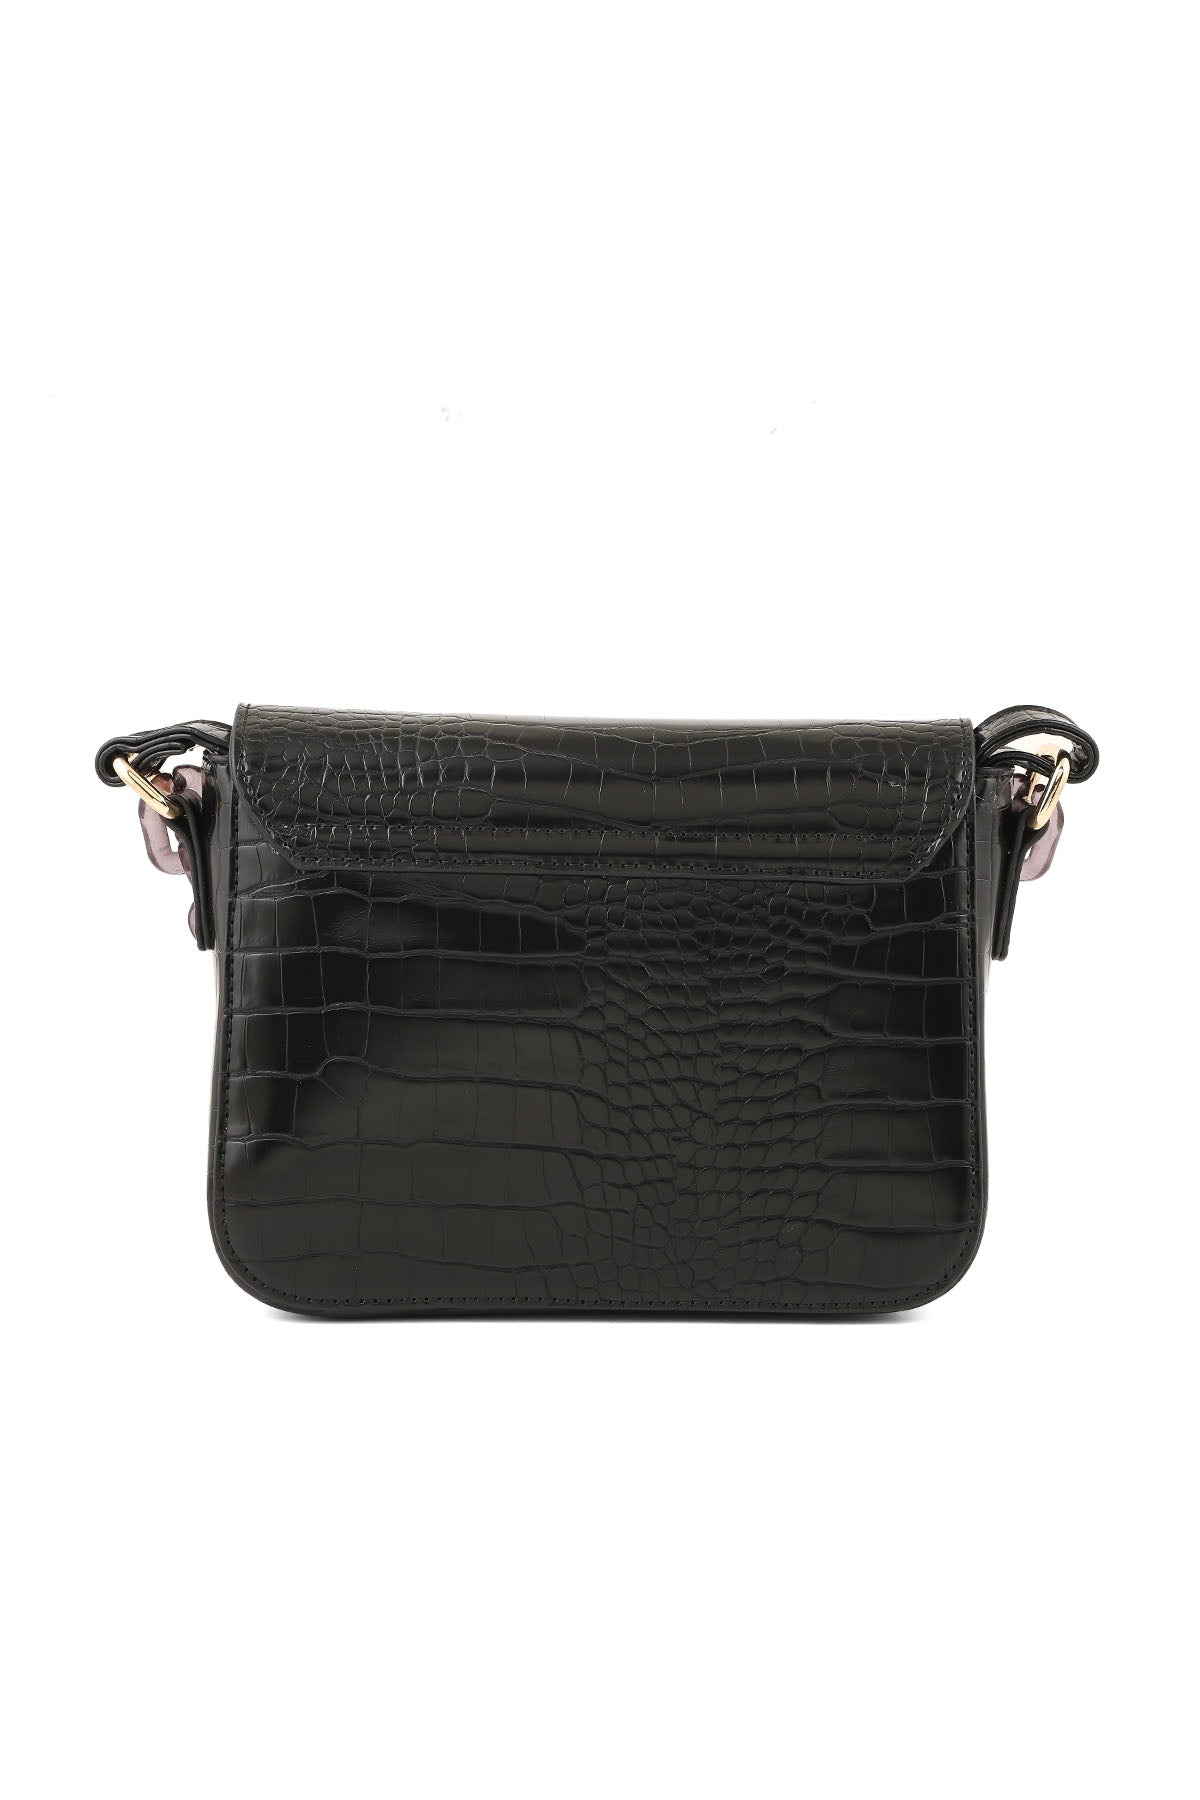 Flap Shoulder Bags B15017-Black